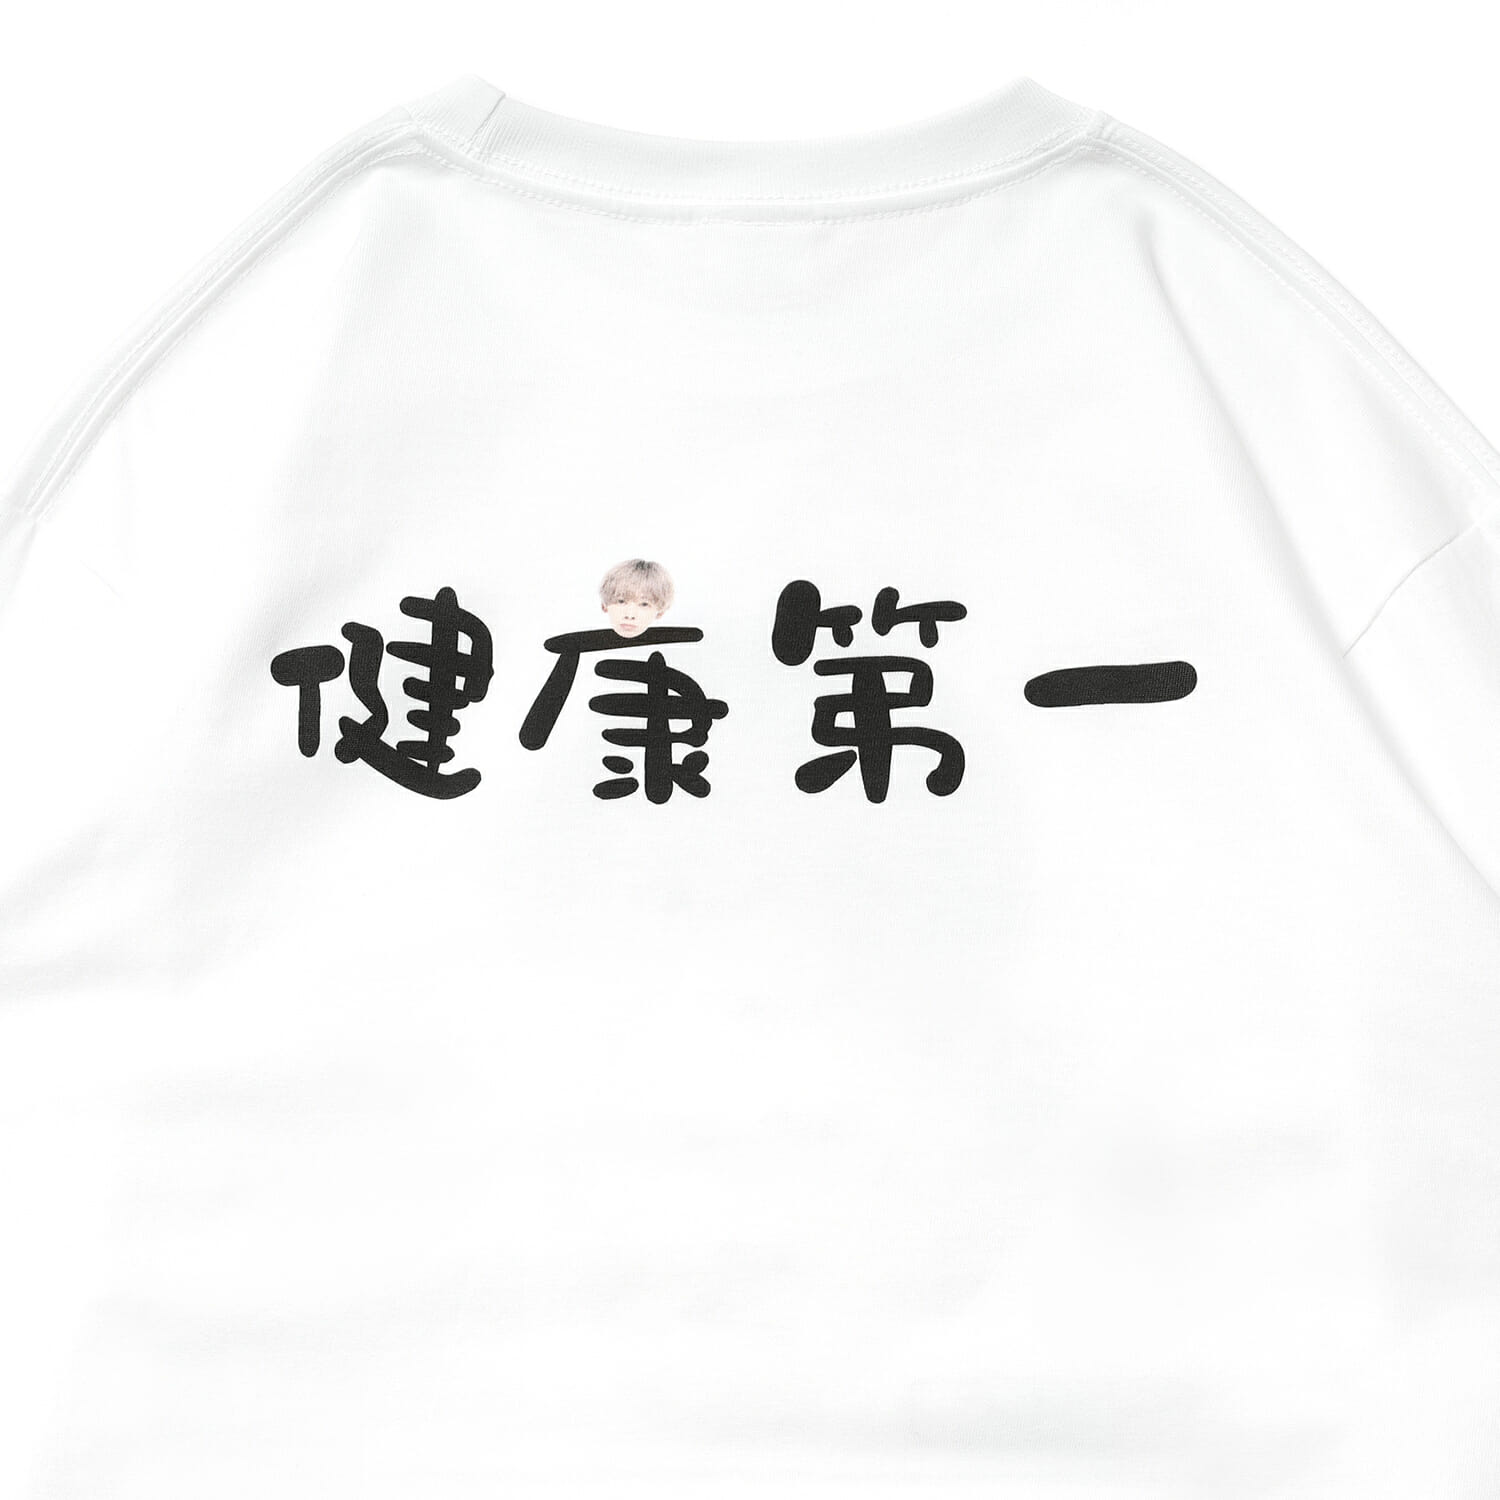 双葉小太郎 生誕Tシャツ